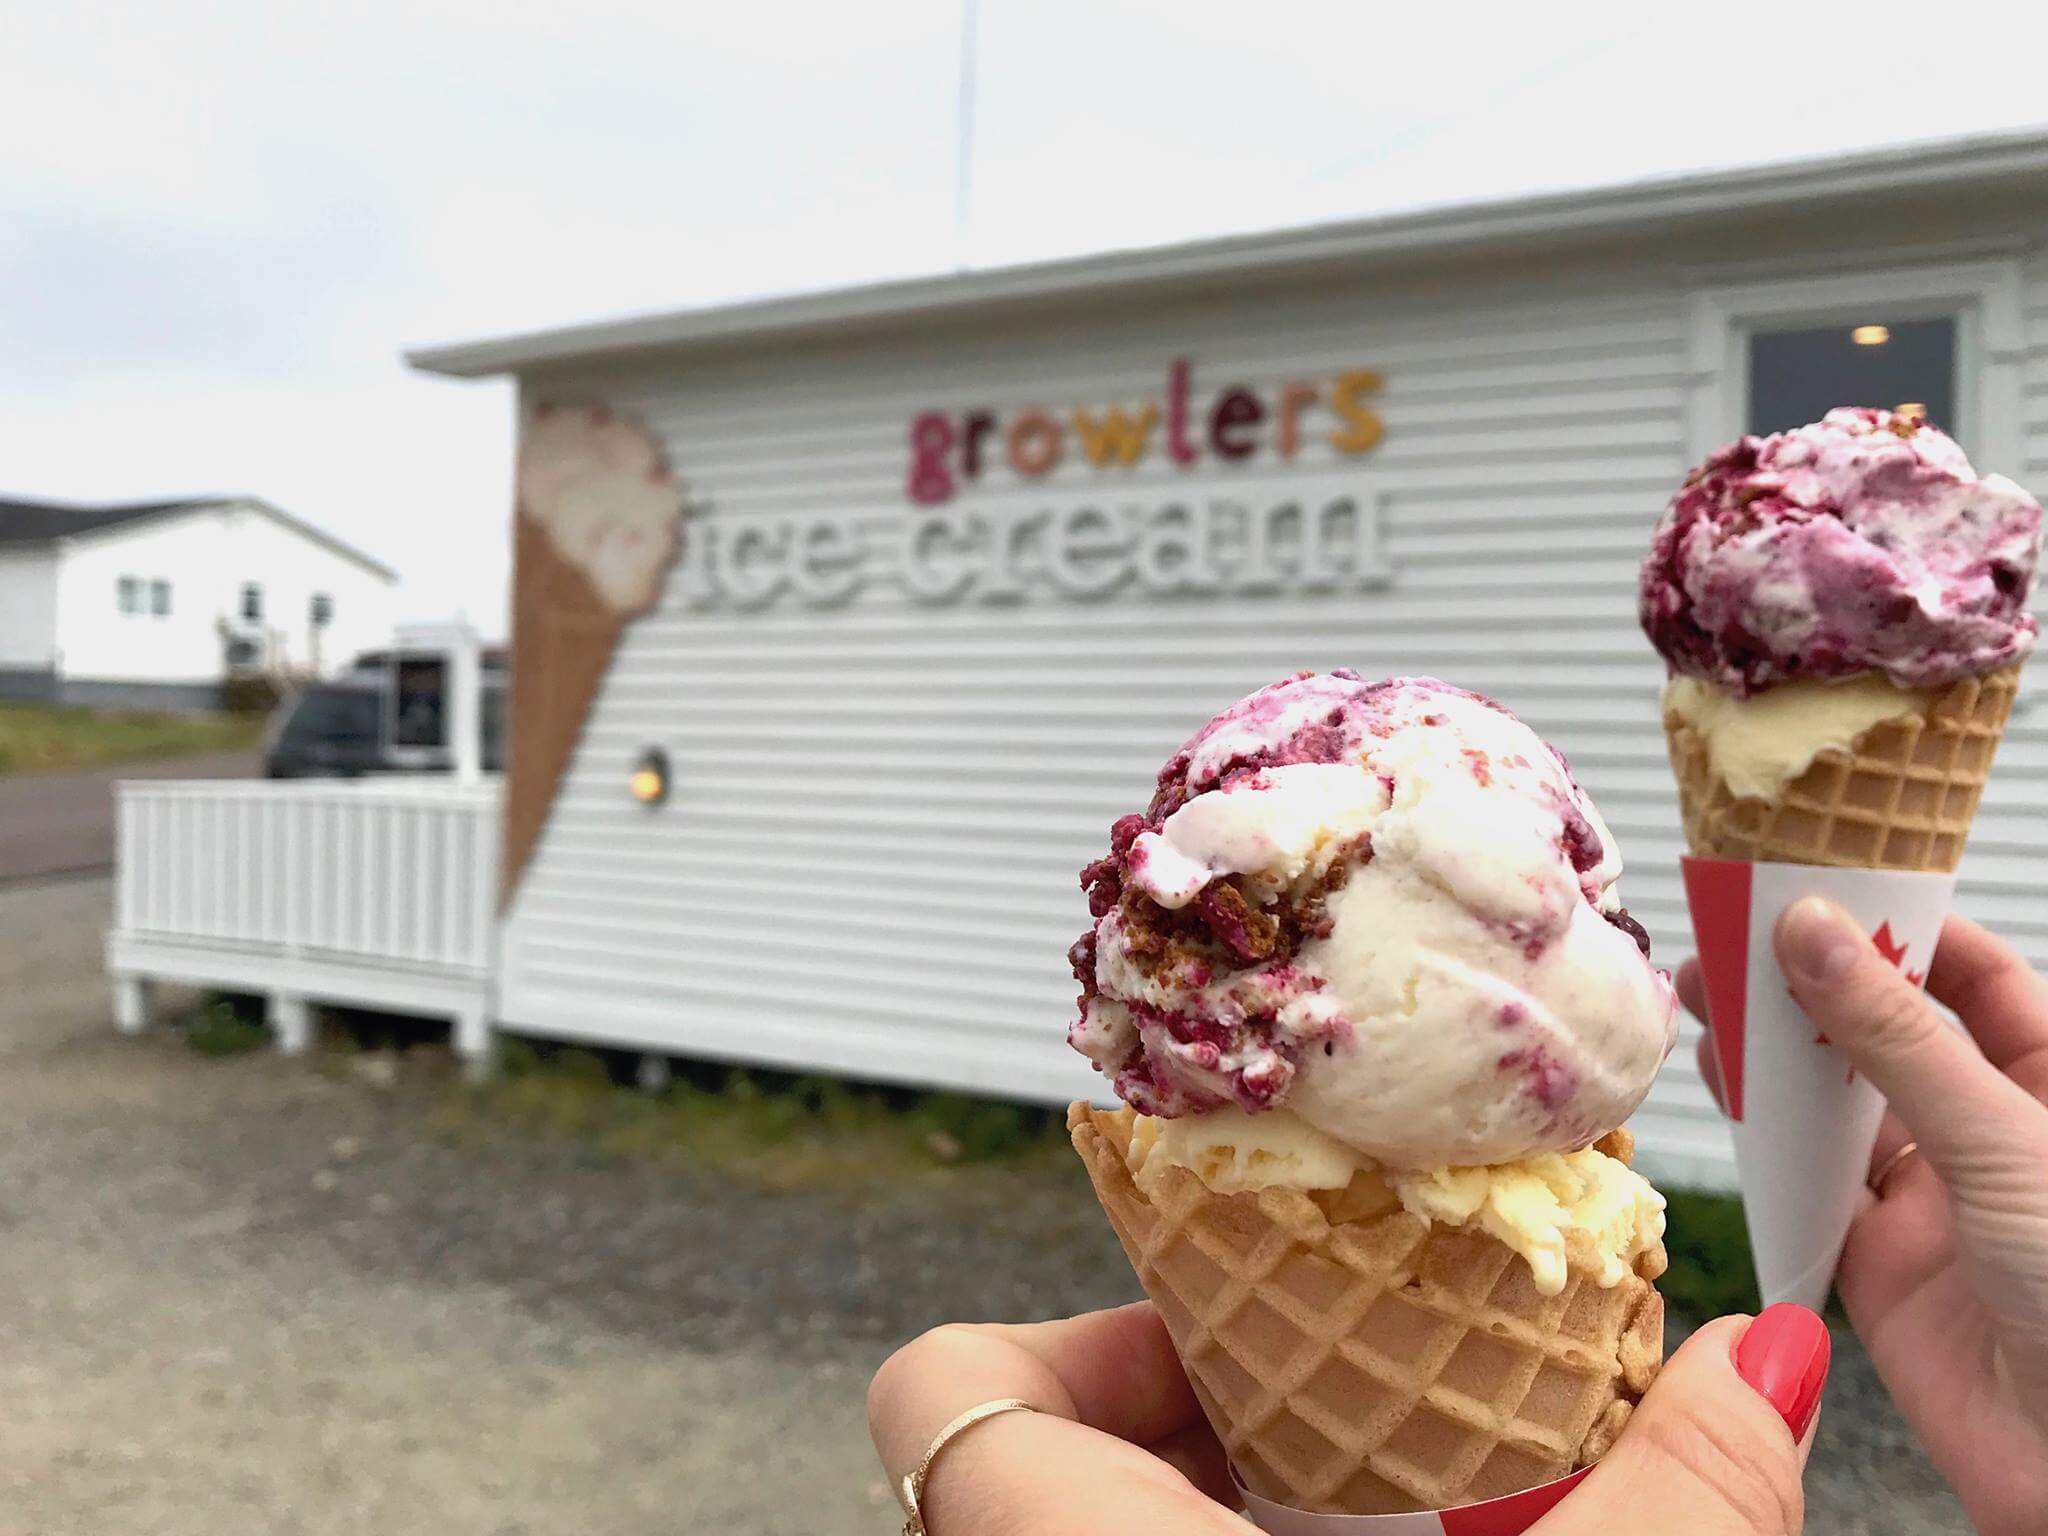 Growlers Ice Cream - Shorefast